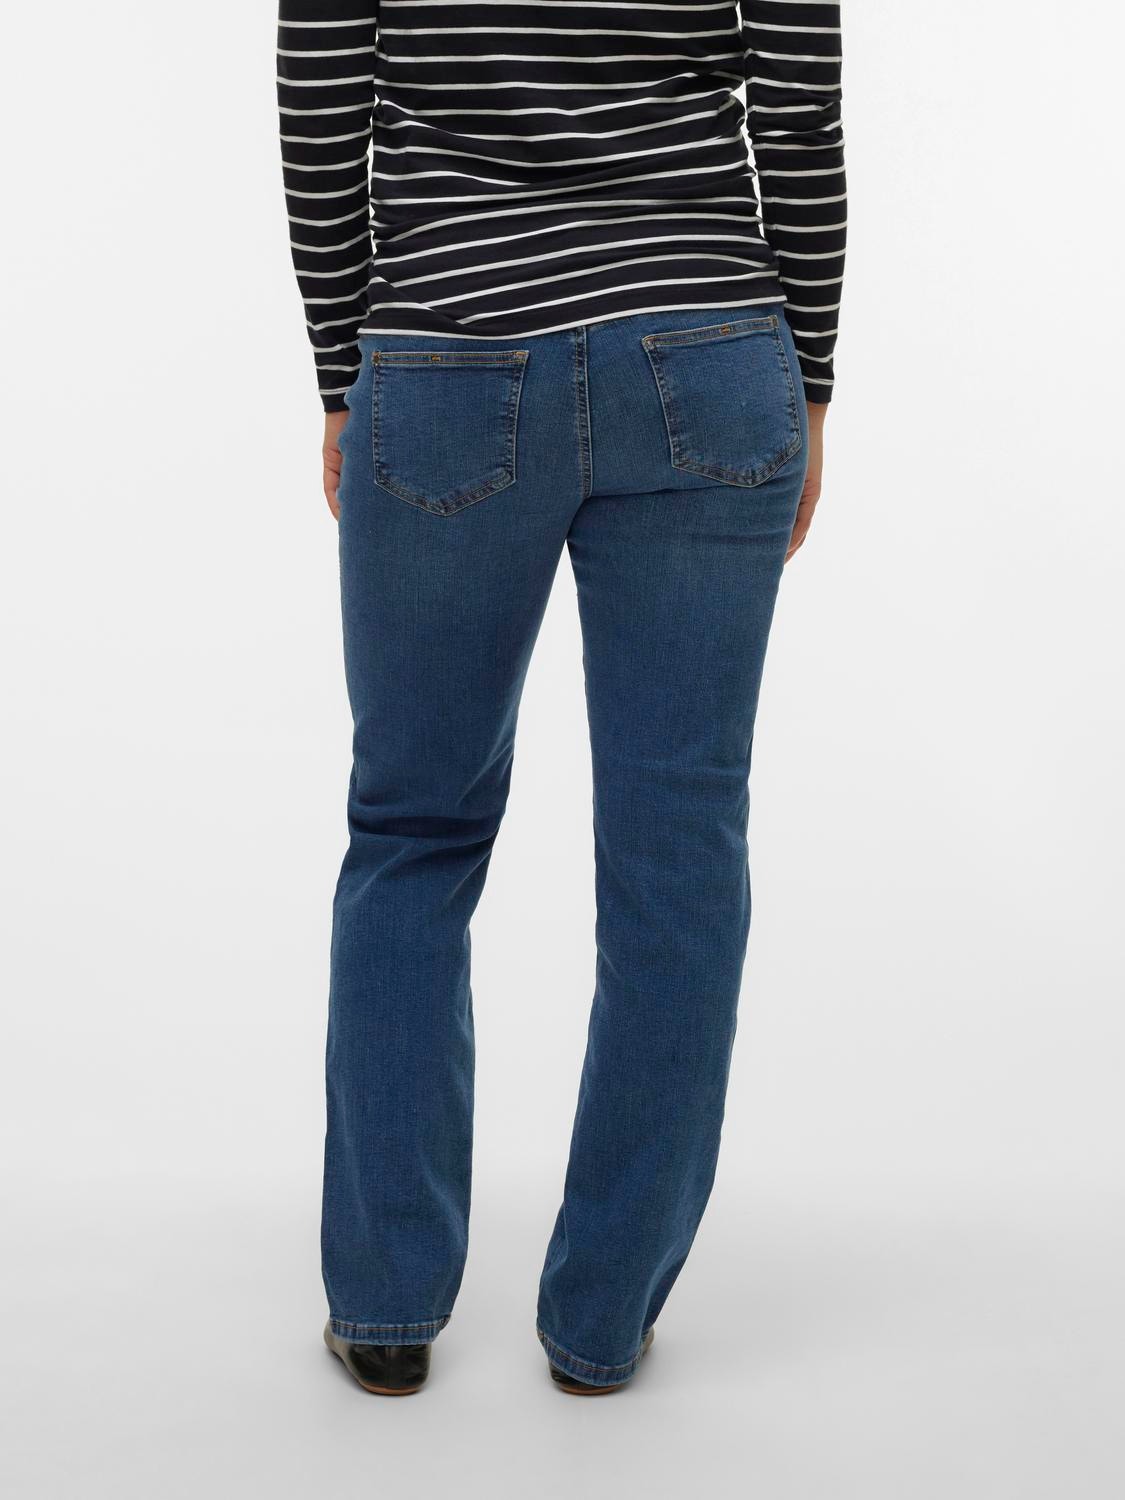 MAMA.LICIOUS Jeans Regular Fit Vita media -Medium Blue Denim - 20019518